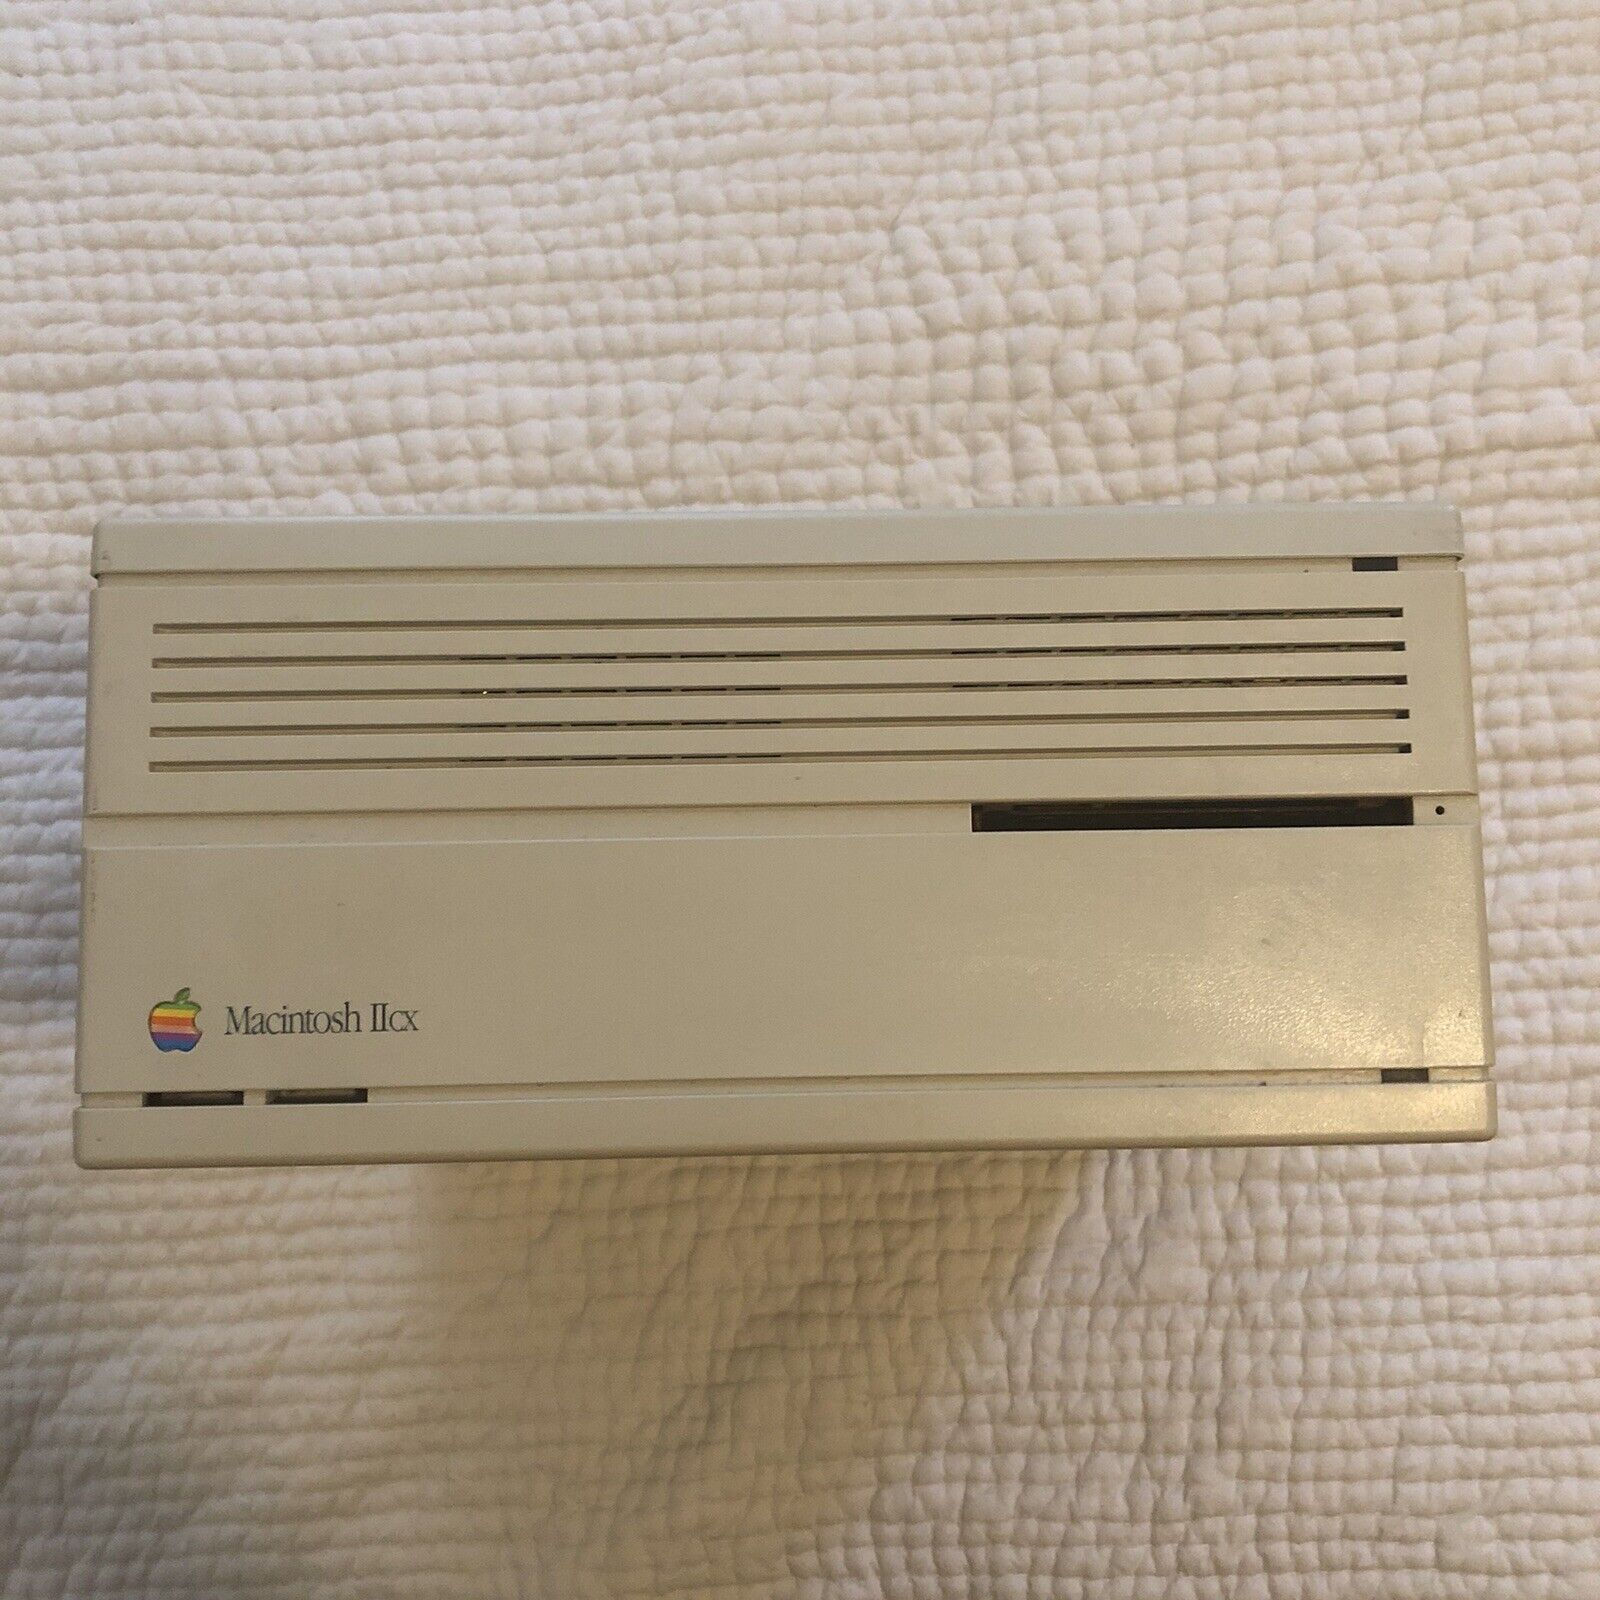 Apple MacIntosh IIcx Vintage Desktop Computer M5650 - 1988/89